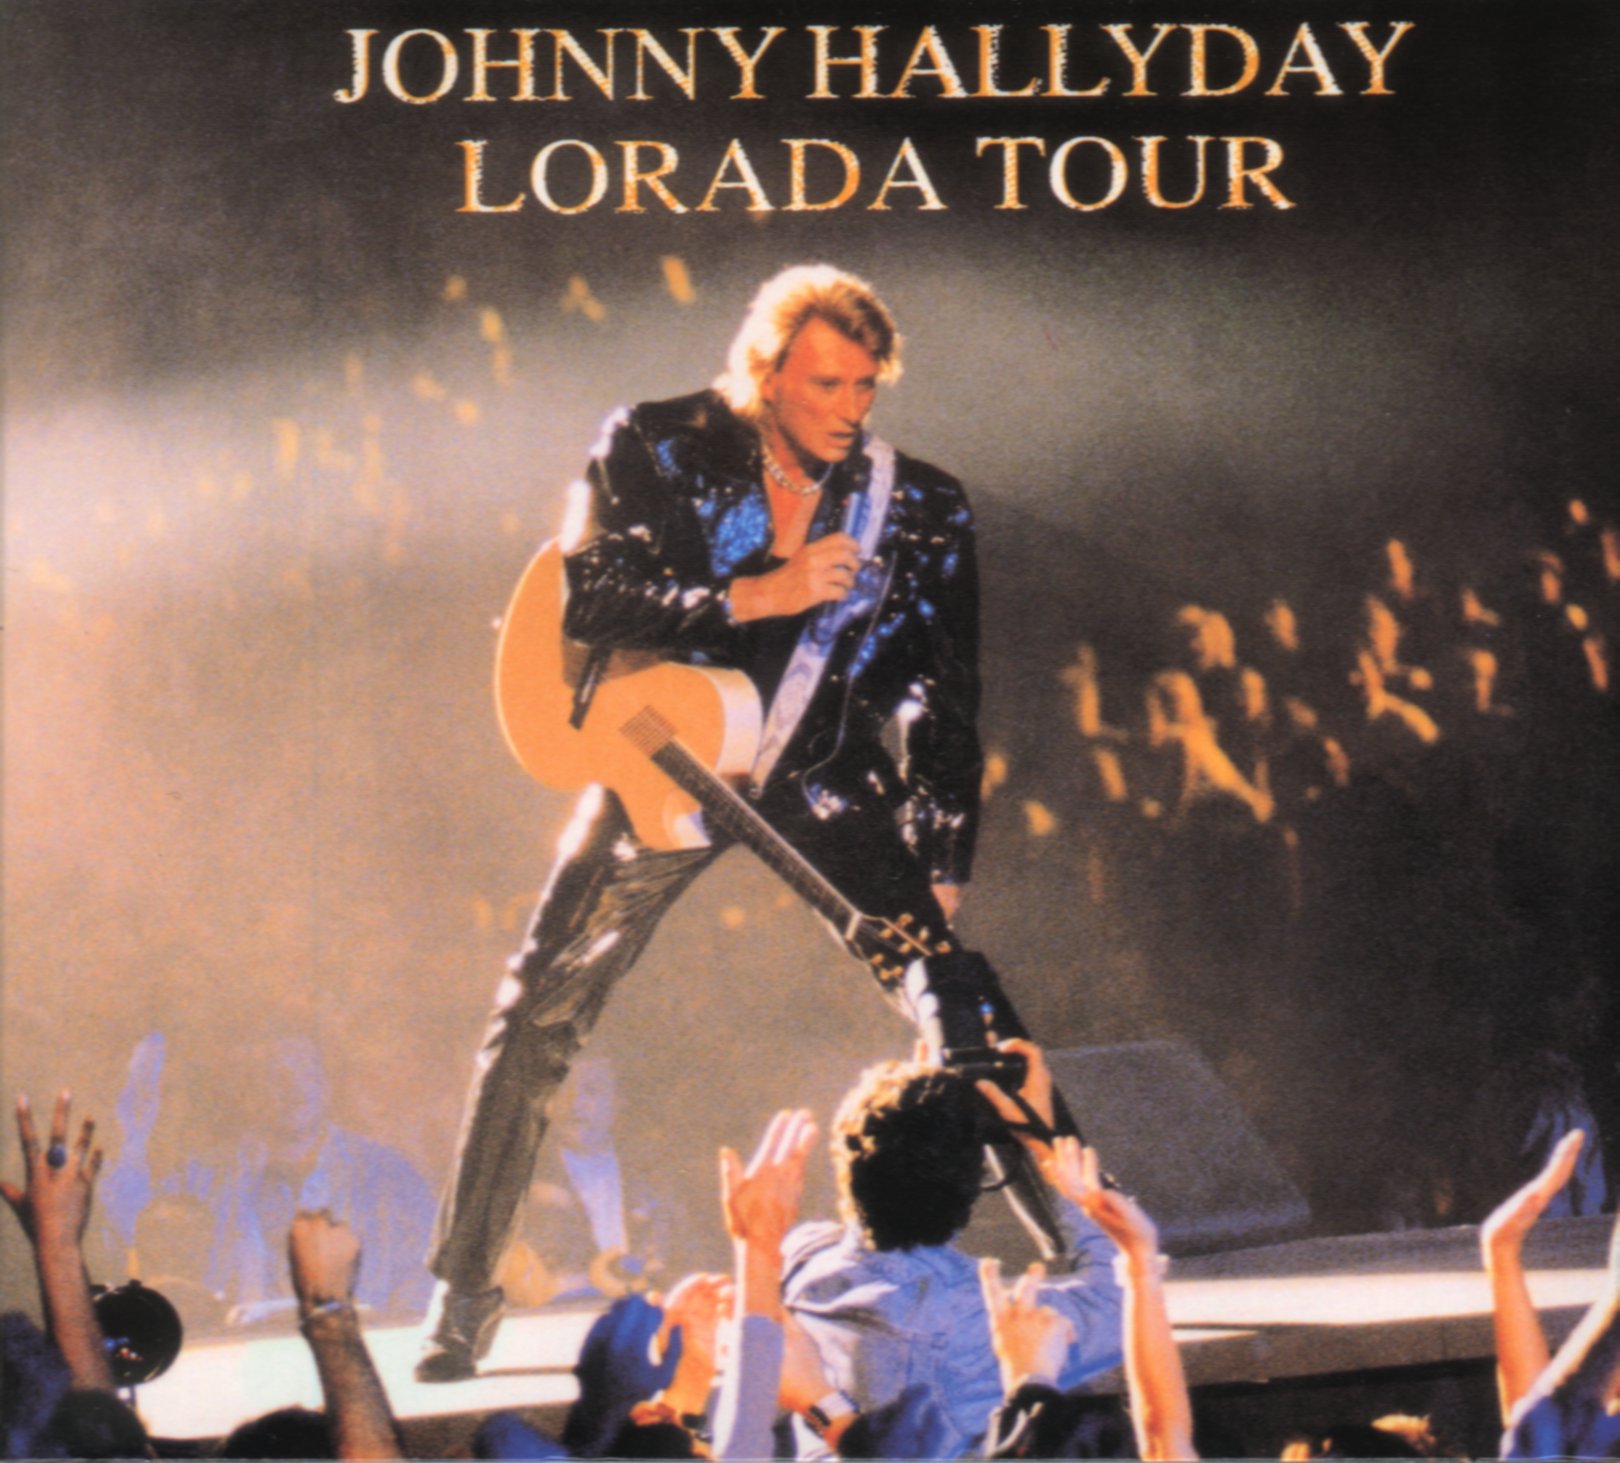 Johnny hallyday - Lorada tour